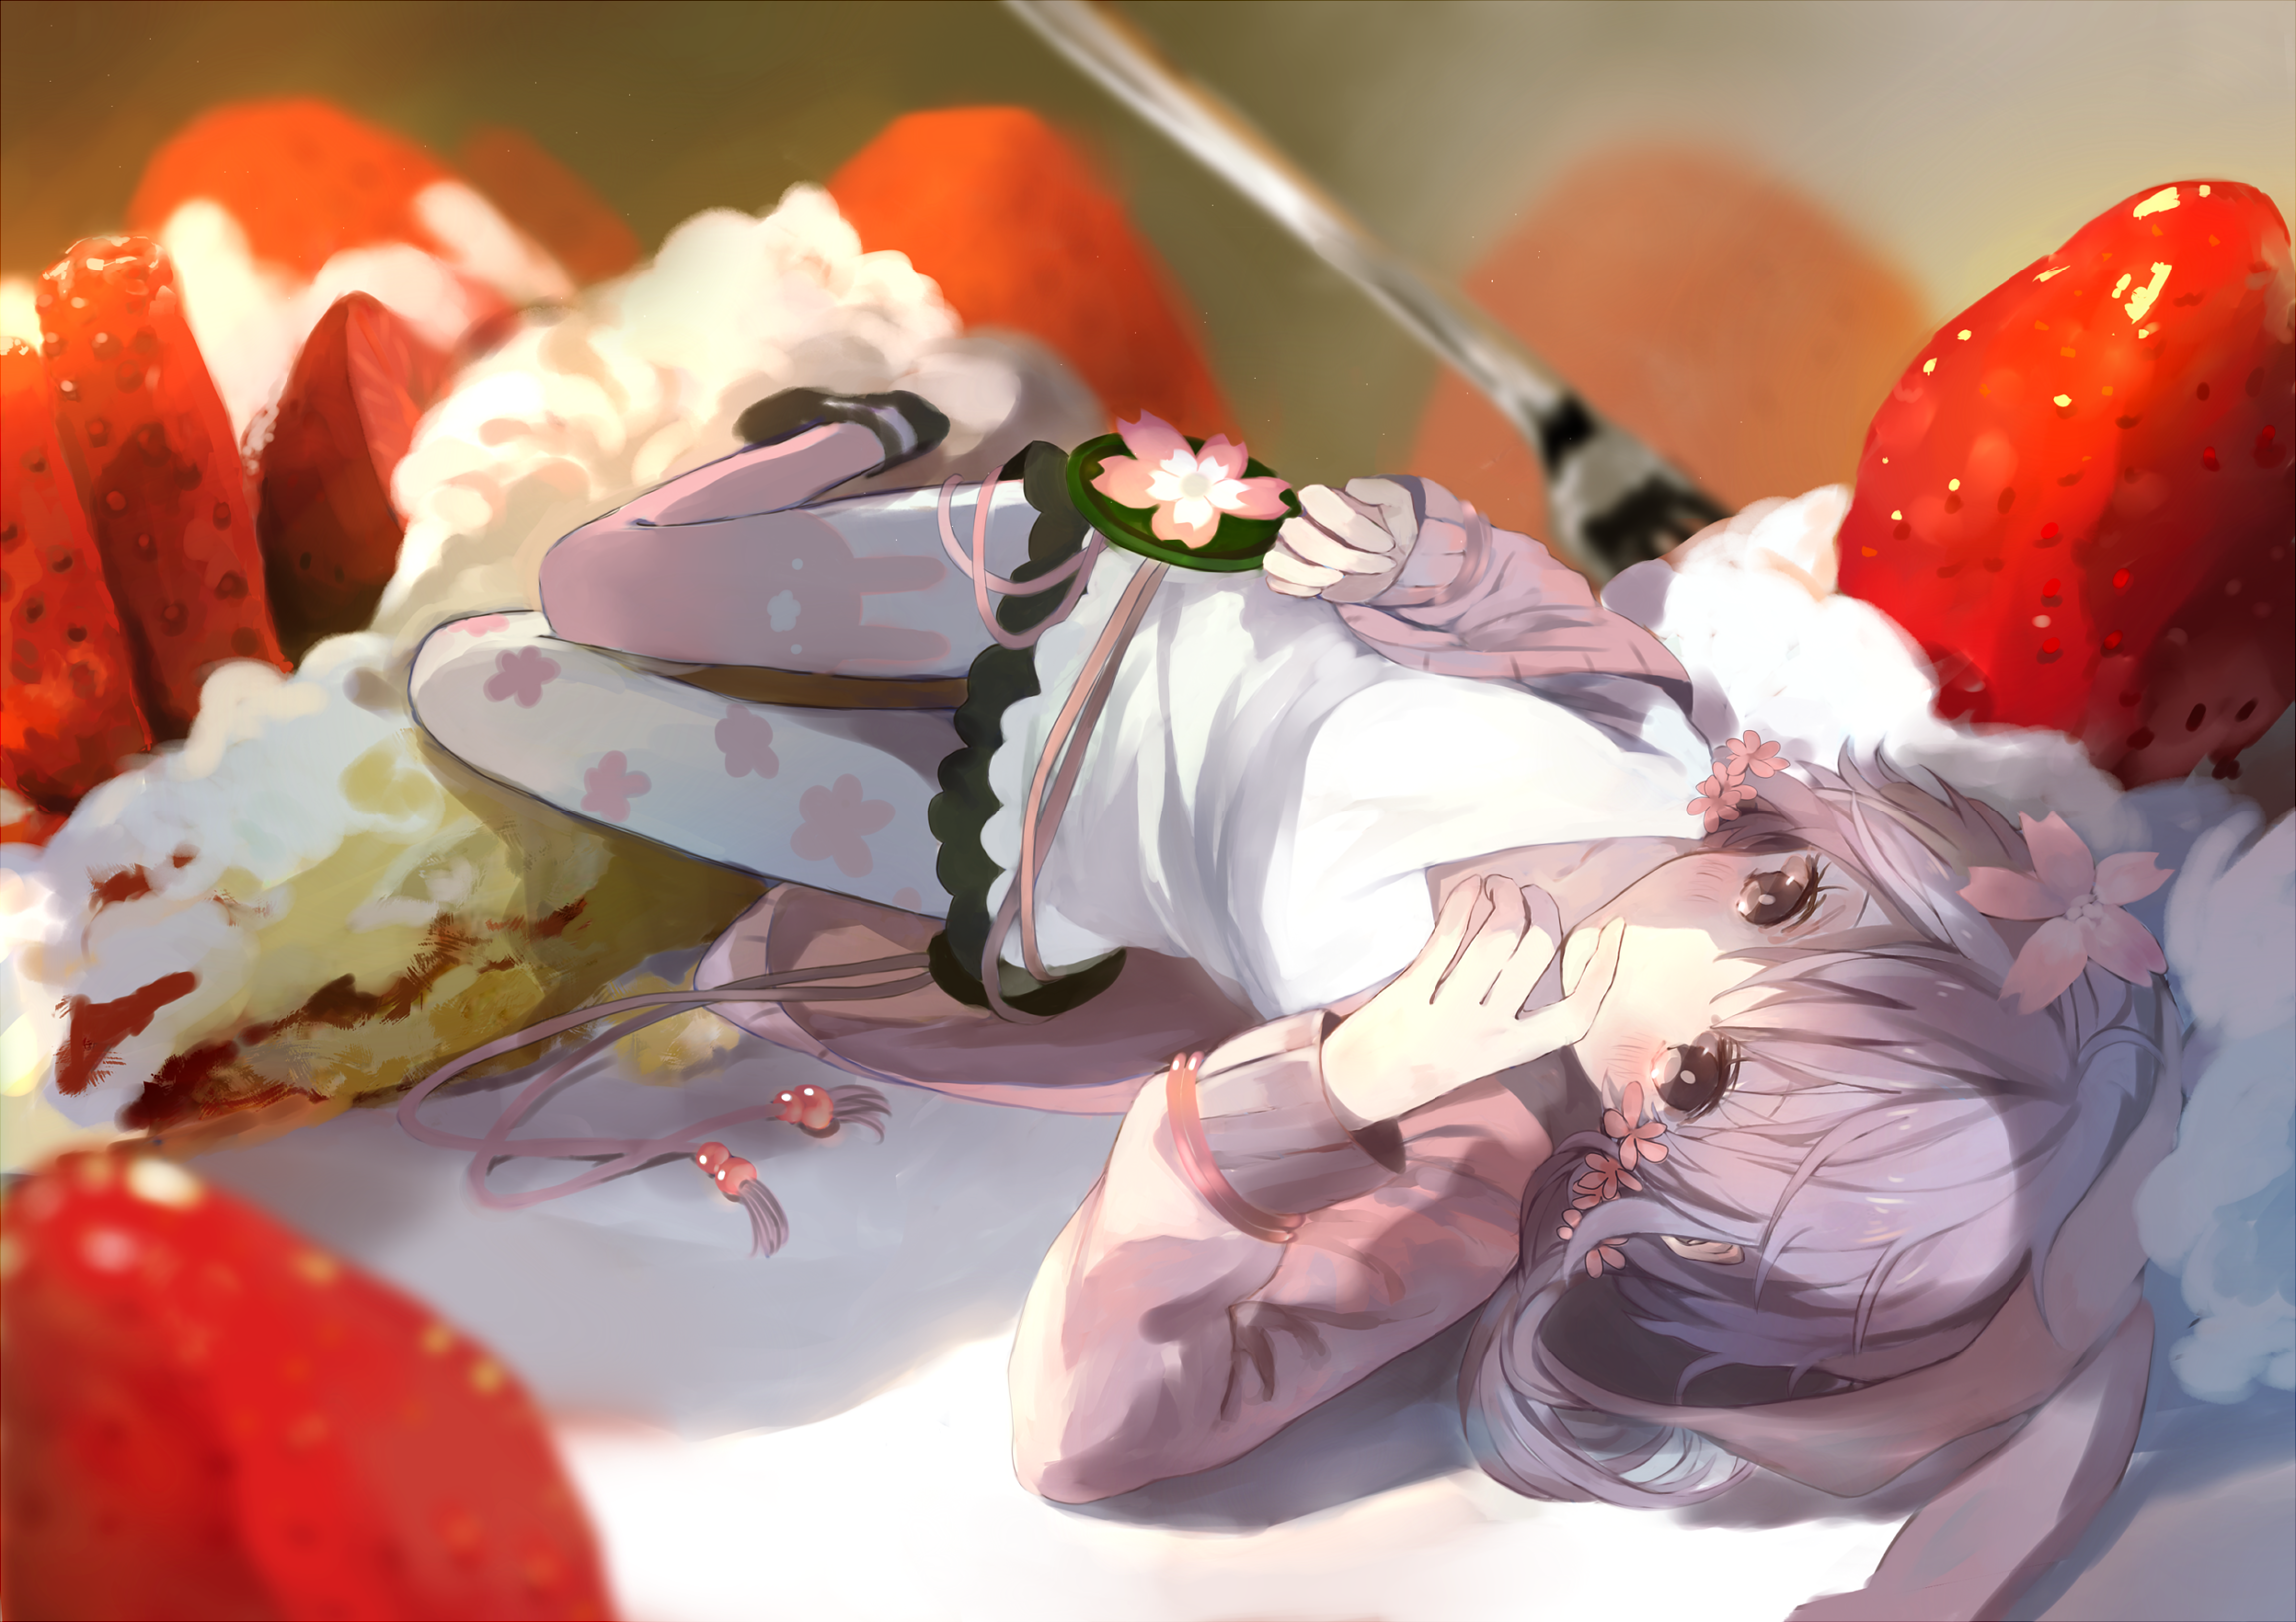 Anime 2300x1625 Yuzuki Yukari Vocaloid anime girls anime colorful flower in hair thighs together lying down food fruit strawberries